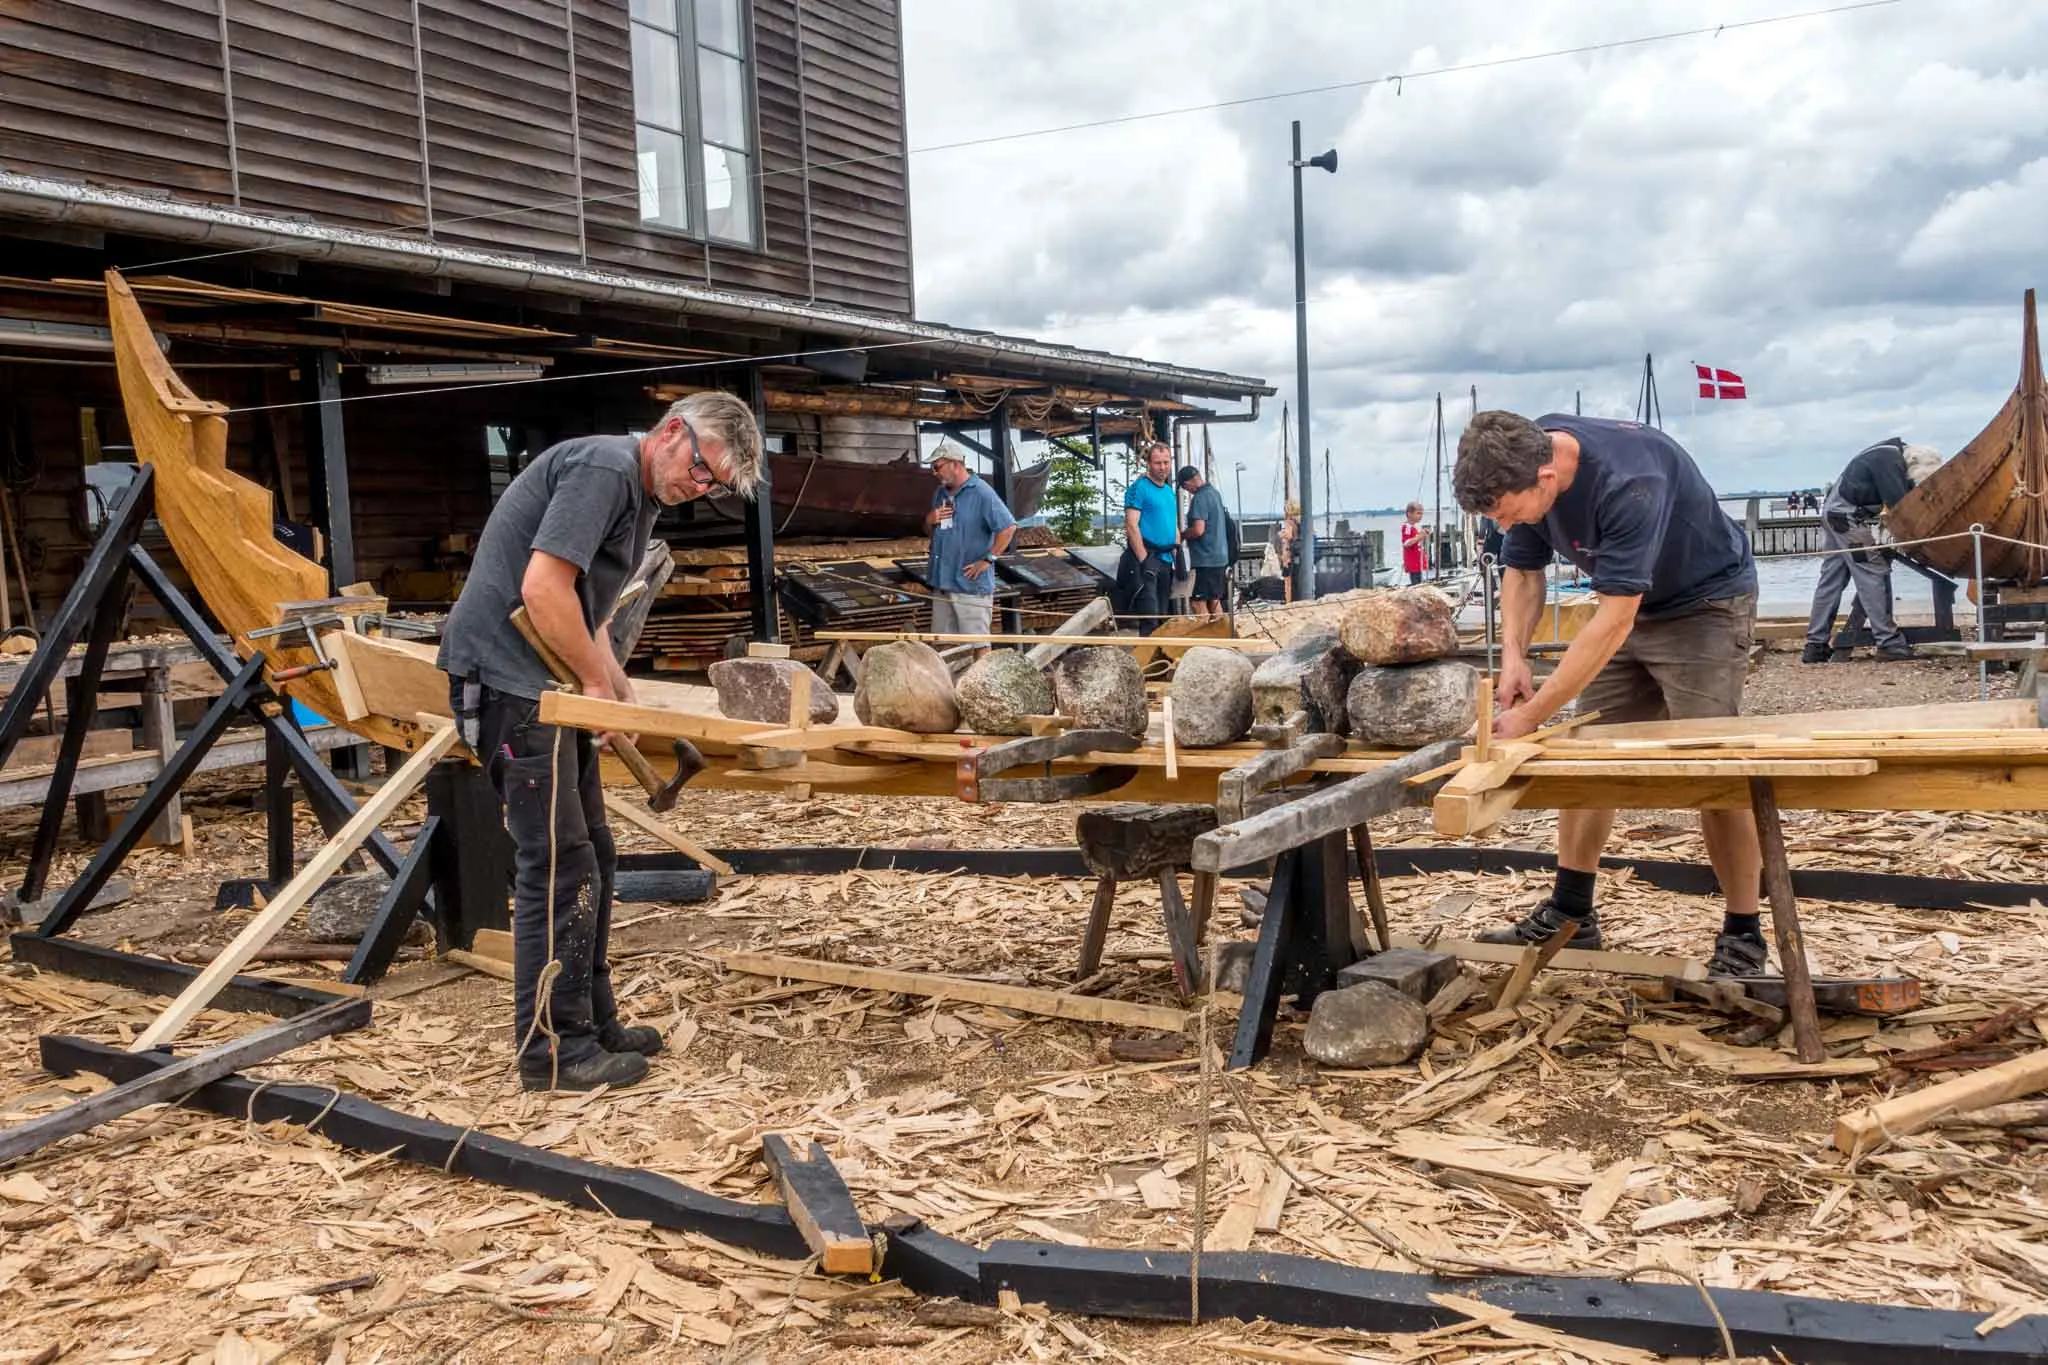 Expert builders building replica viking ships at the Viking Ship Museum in Roskilde, Denmark